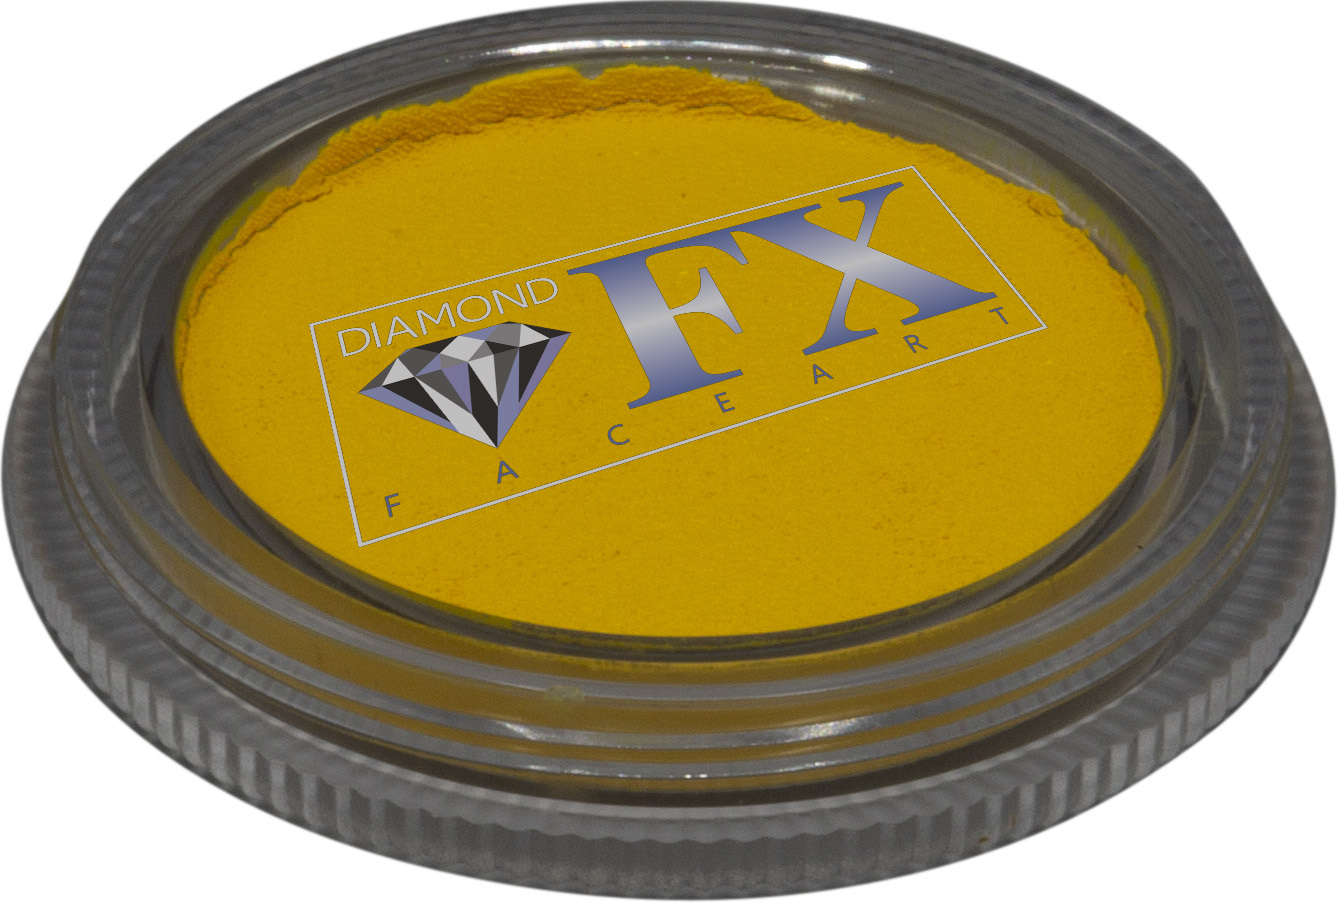 Diamond FX Yellow 30g - Small Image